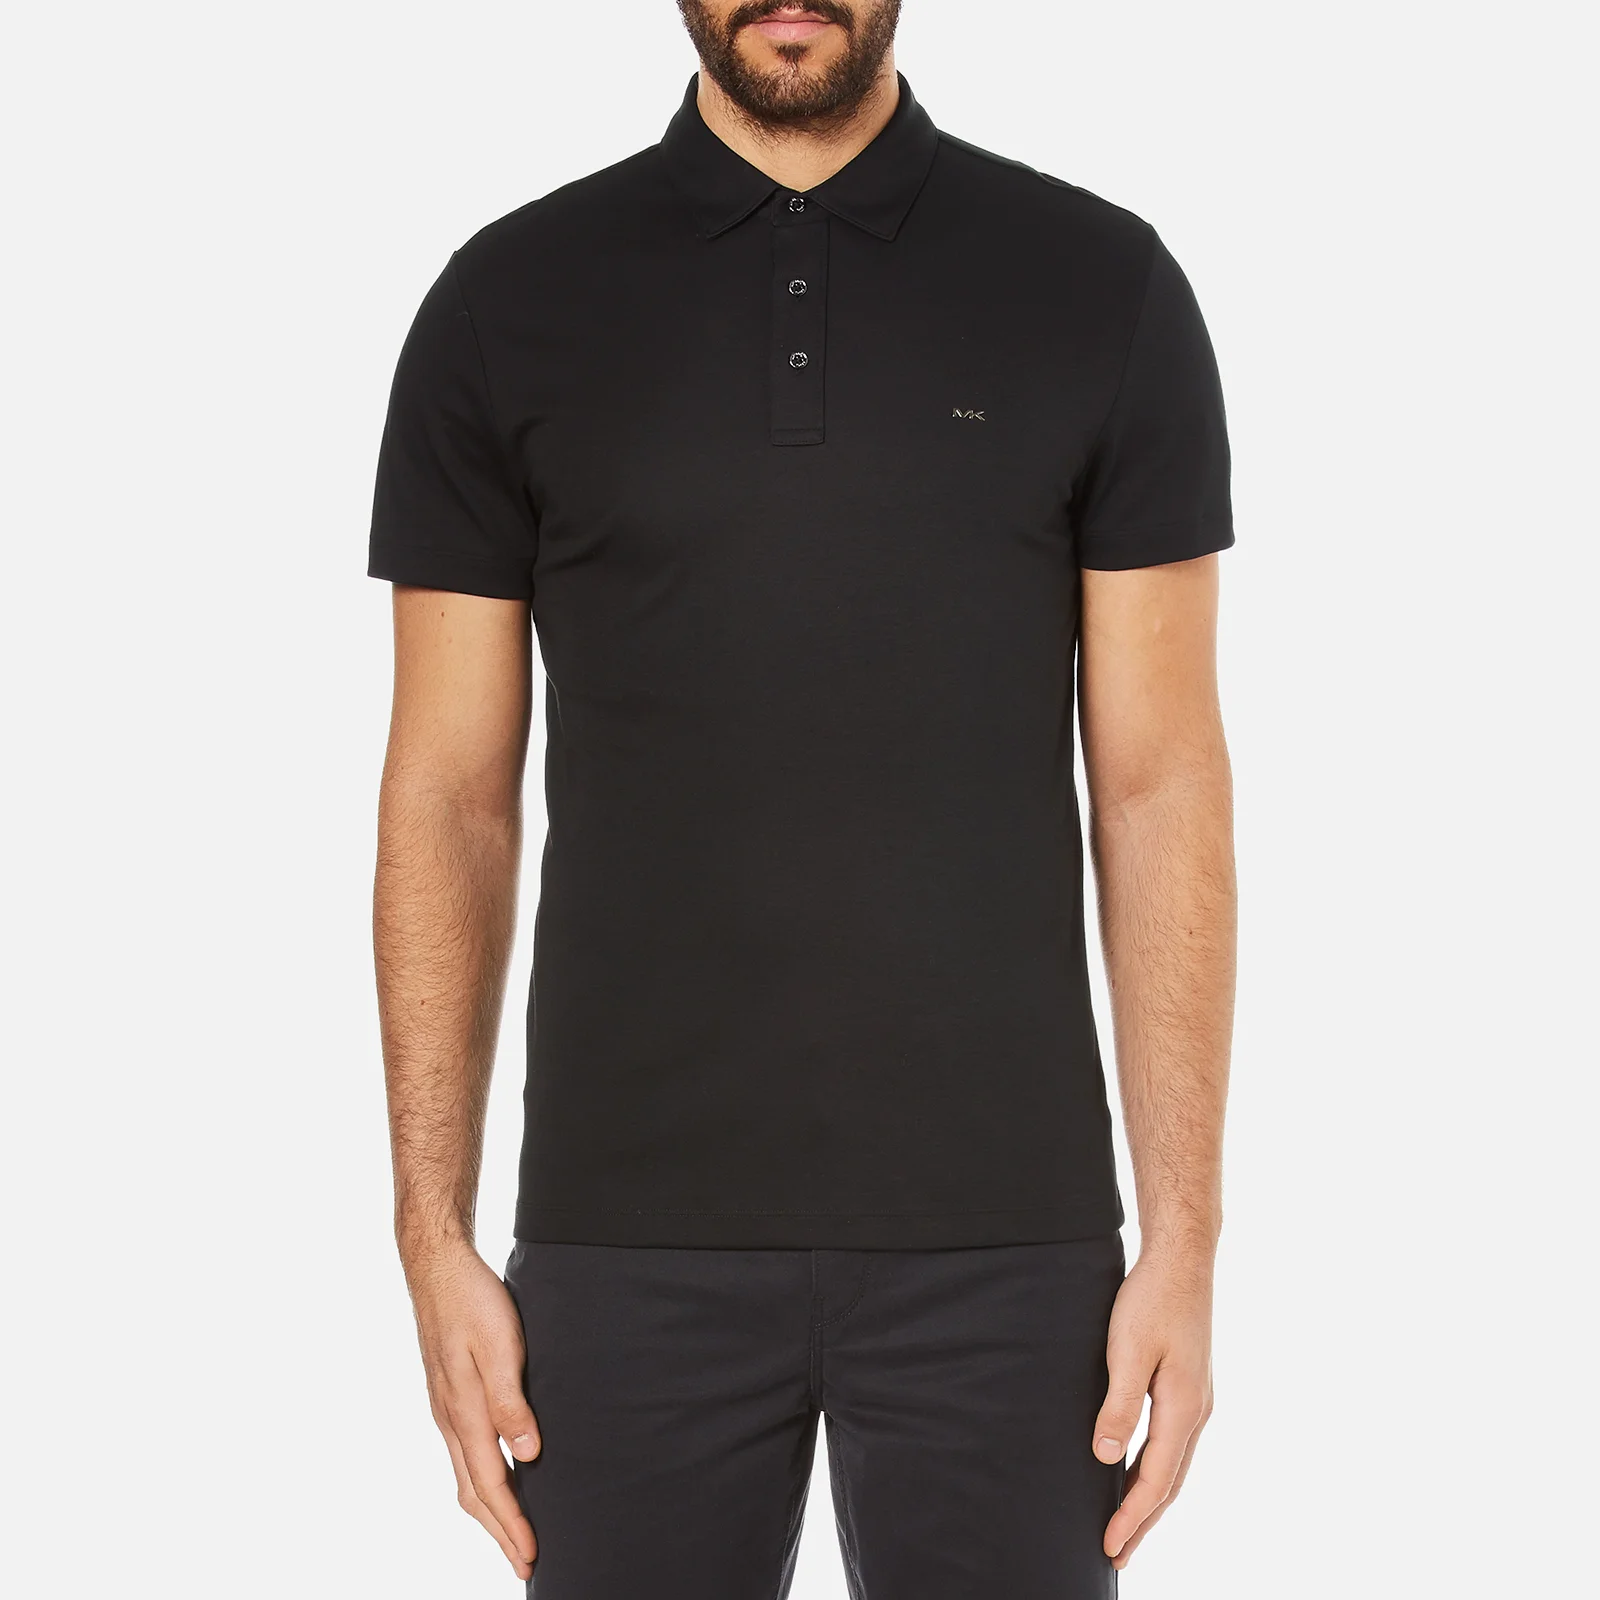 Michael Kors Men's Sleek Mk Polo Shirt - Black Image 1